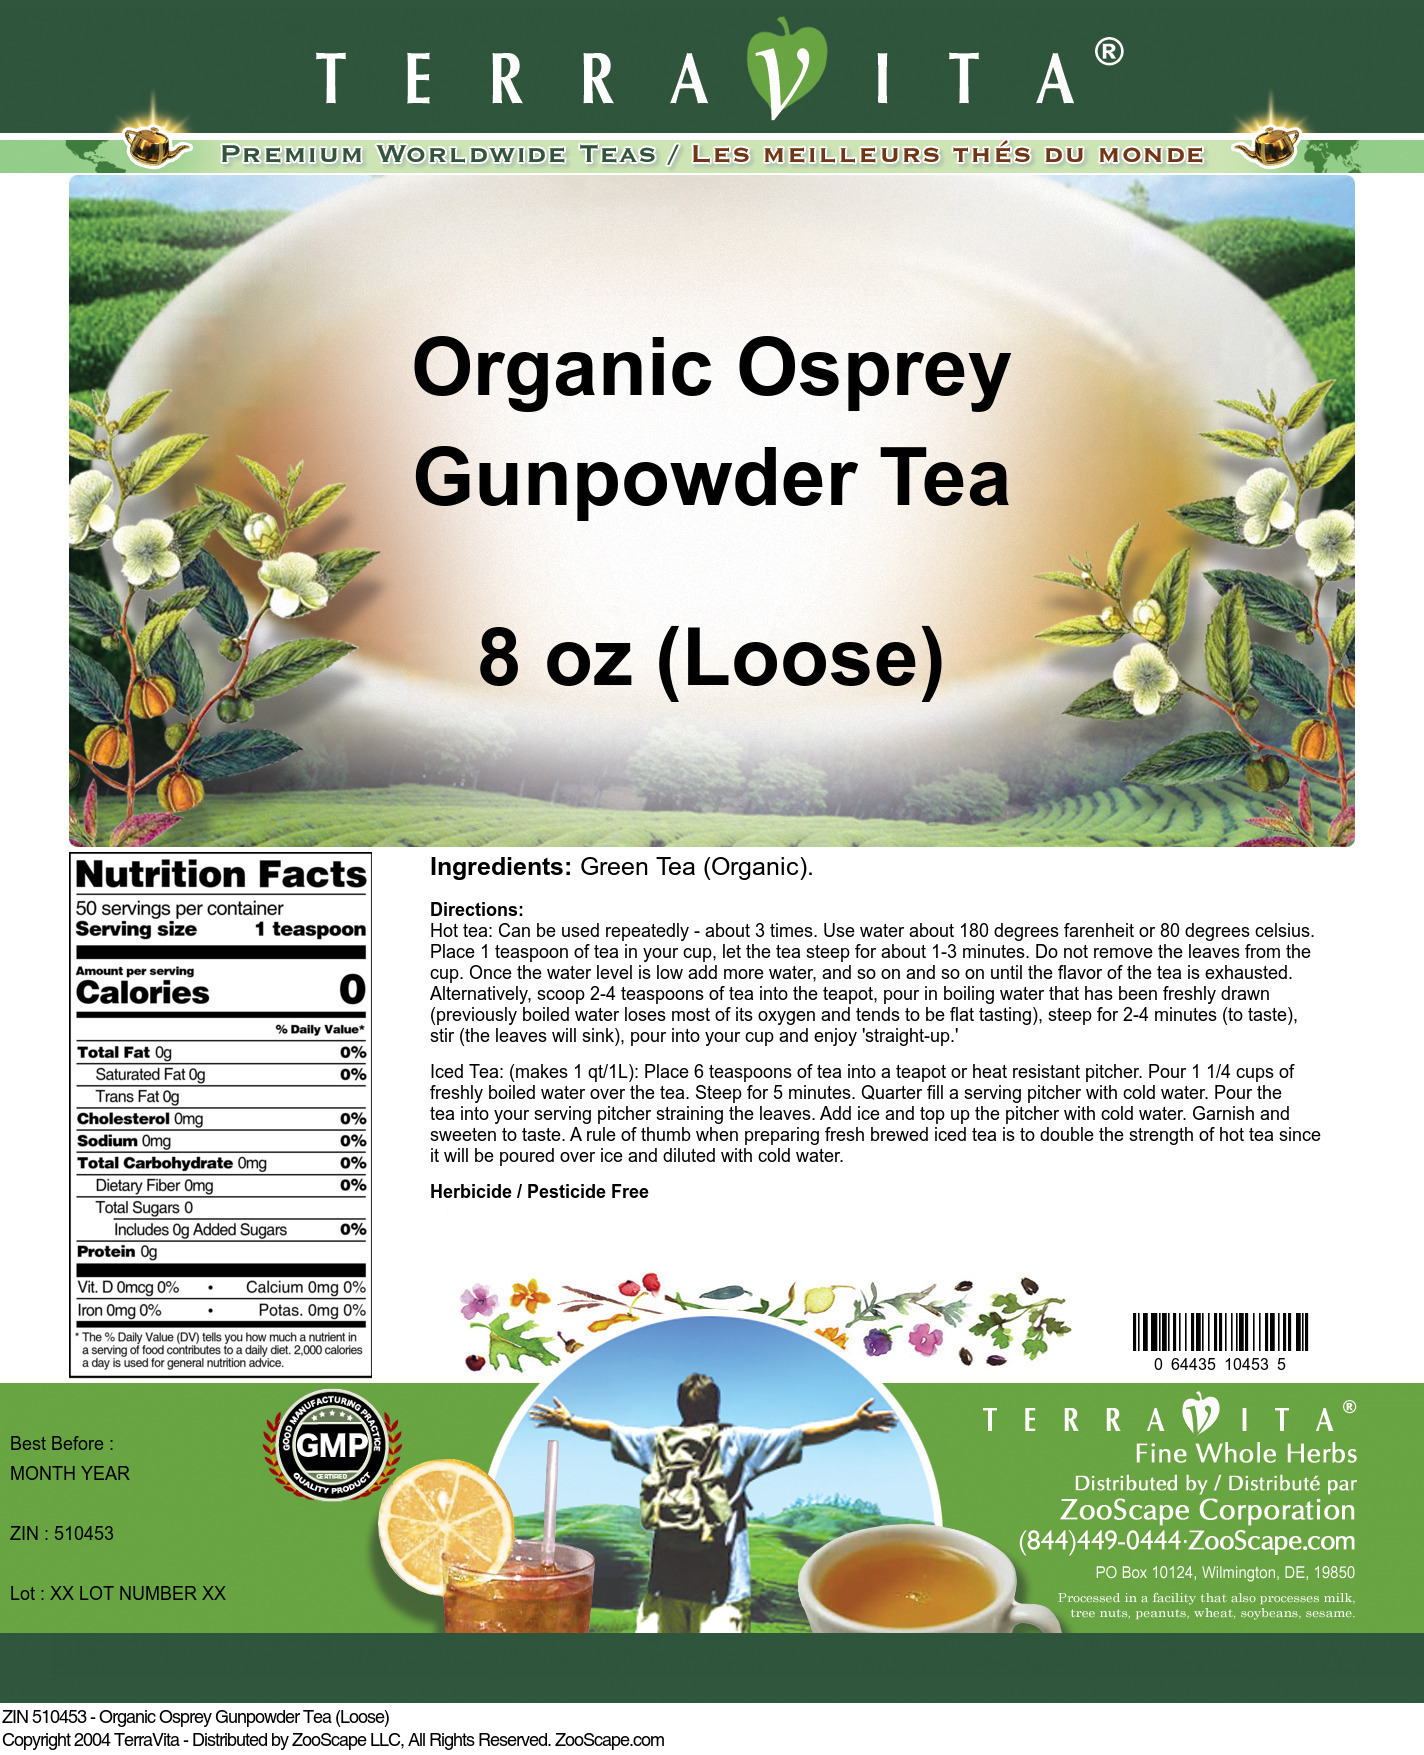 Organic Osprey Gunpowder Tea (Loose) - Label